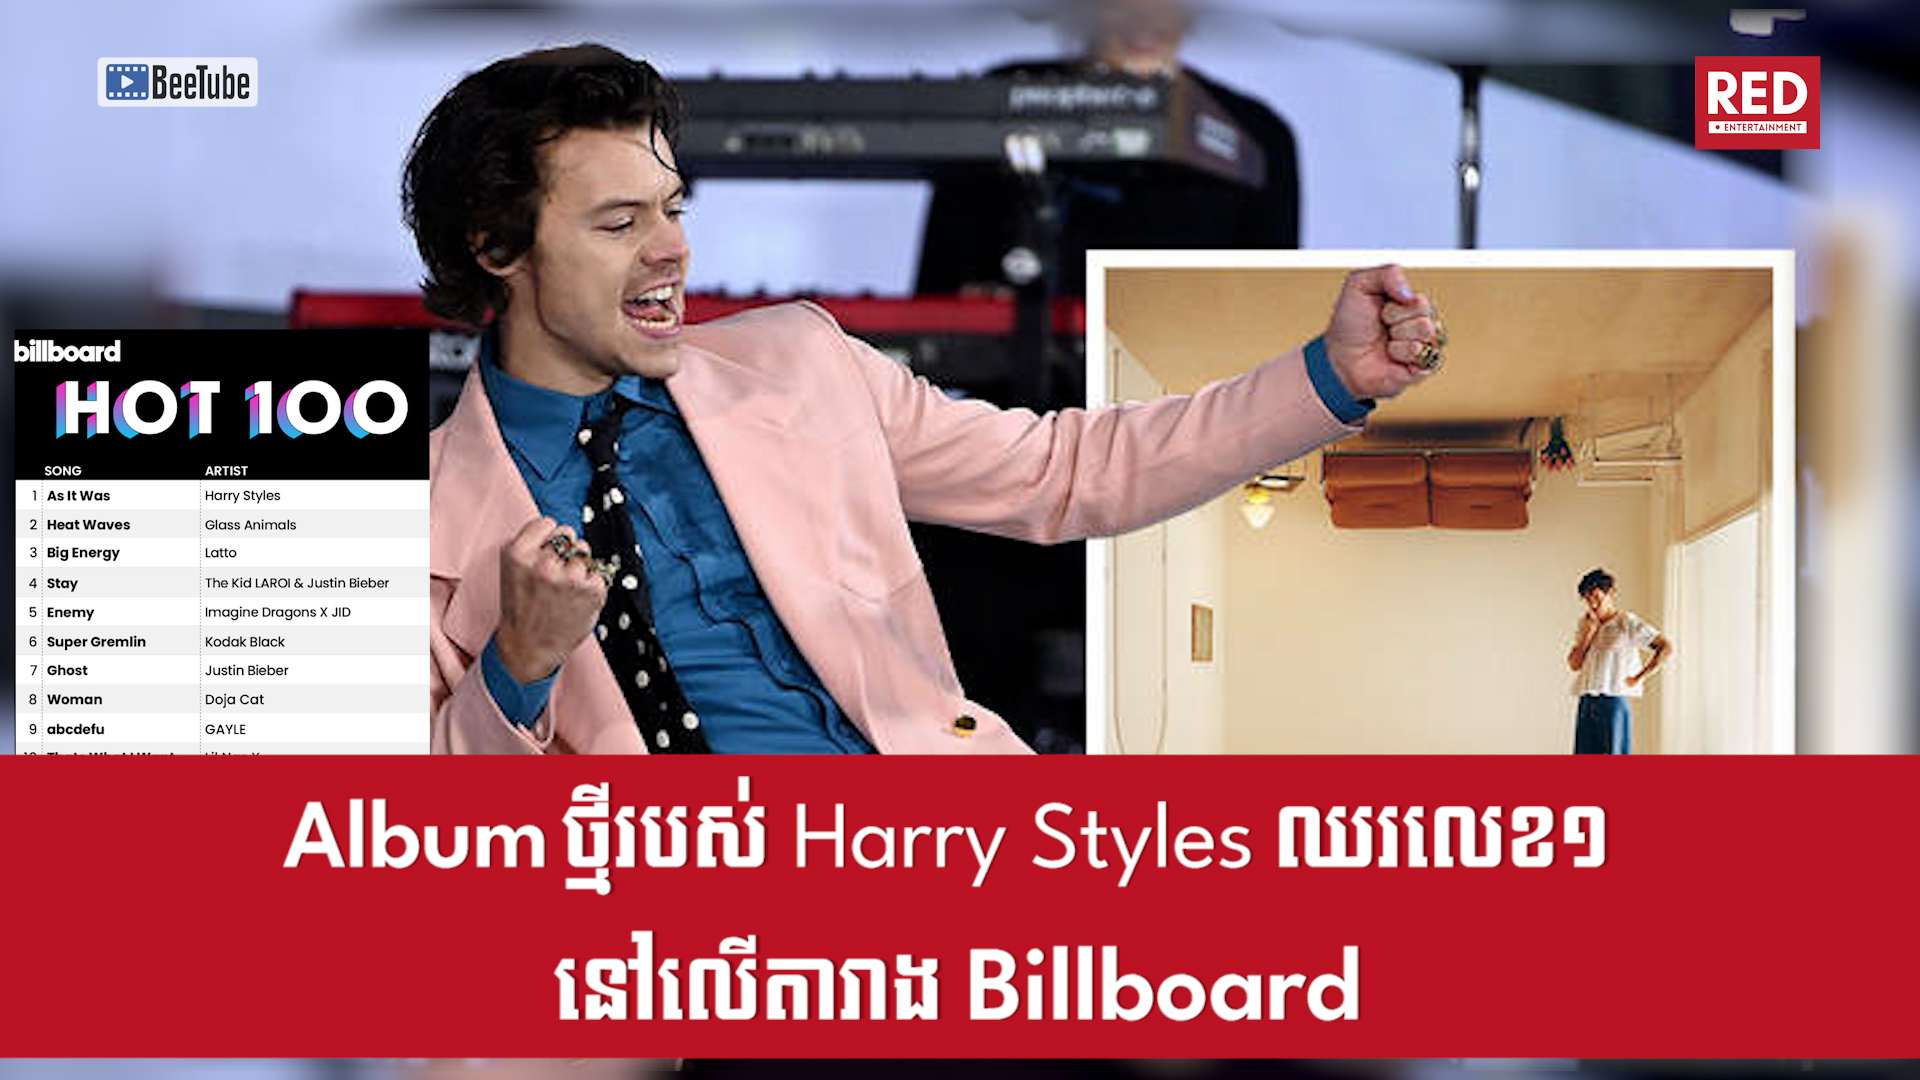 Album ថ្មីរបស់ Harry Styles ឈរលេខ១ នៅលើតារាង Billboard Artist ទាំង 100